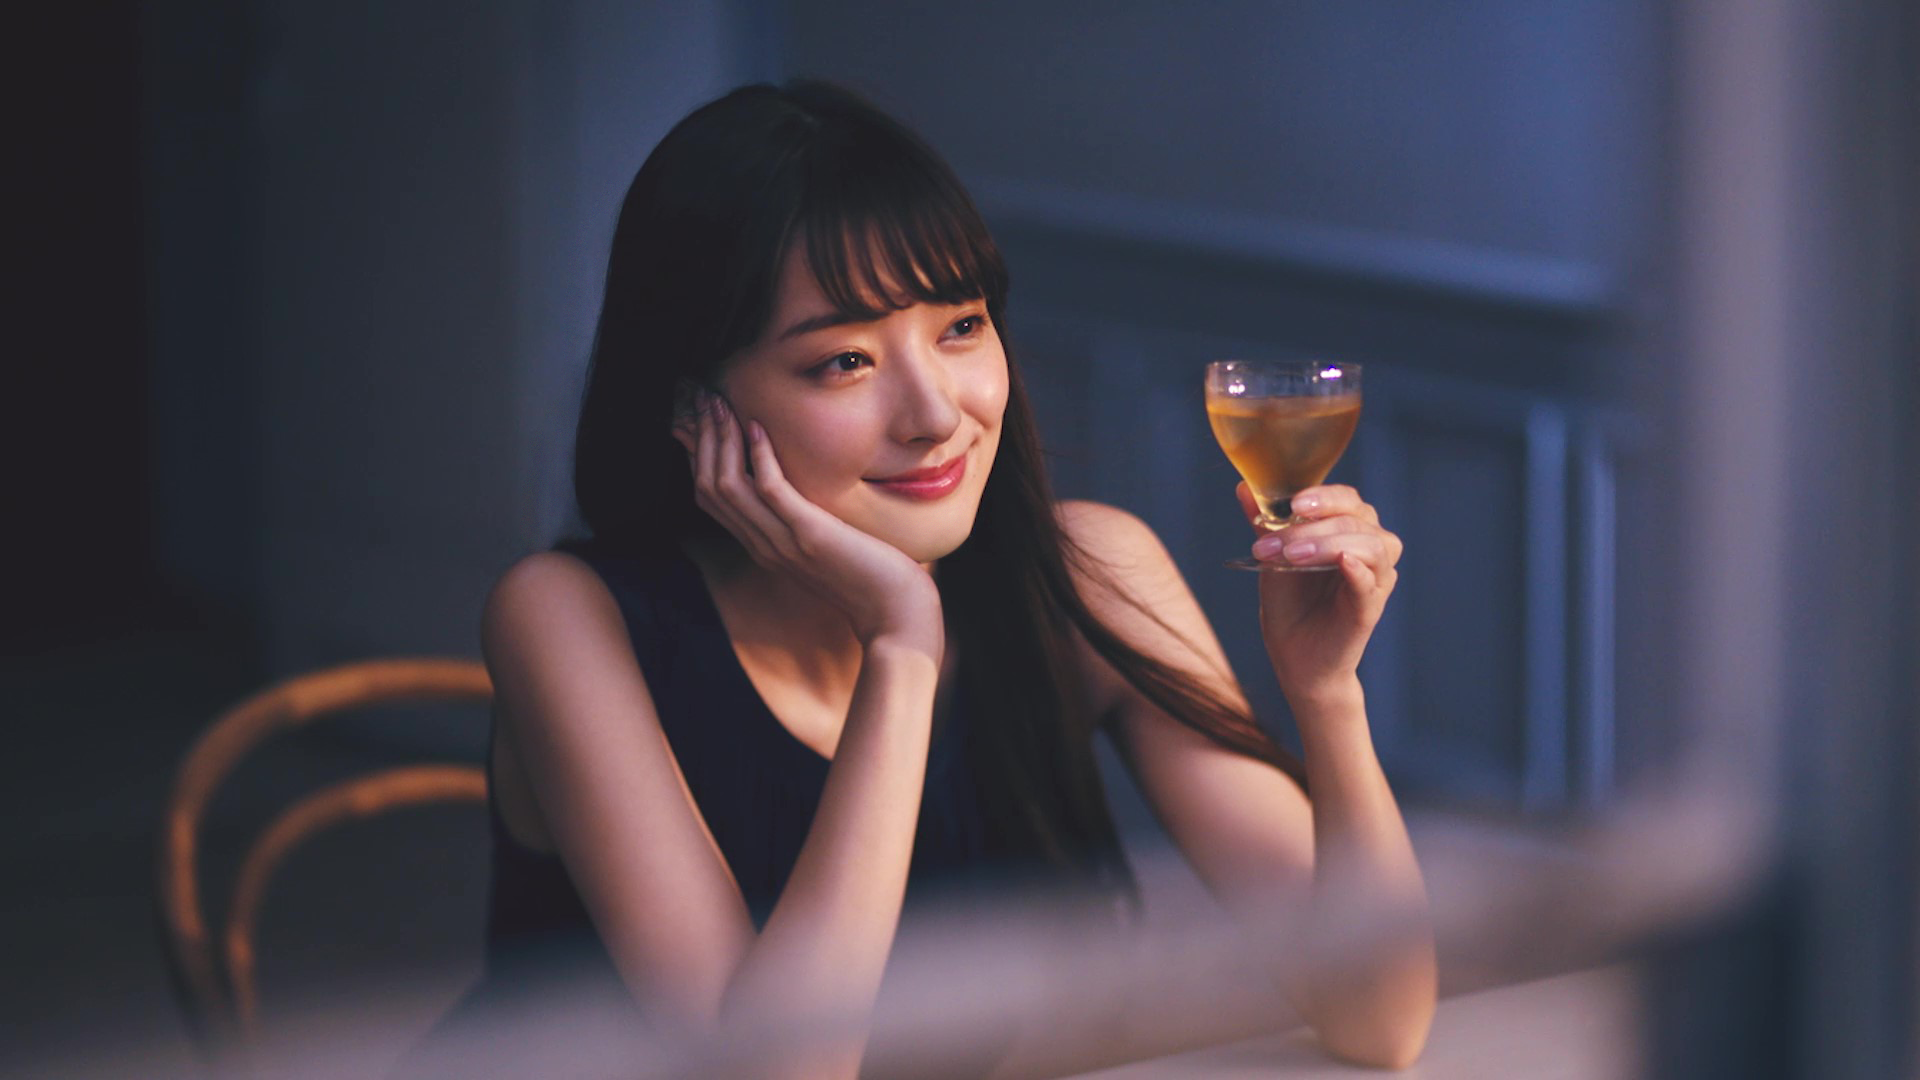 The Choya 新cm完成 新キャラクターに宮本茉由さんを起用 年8月21日 金 より全国オンエア開始 チョーヤ 梅酒株式会社のプレスリリース